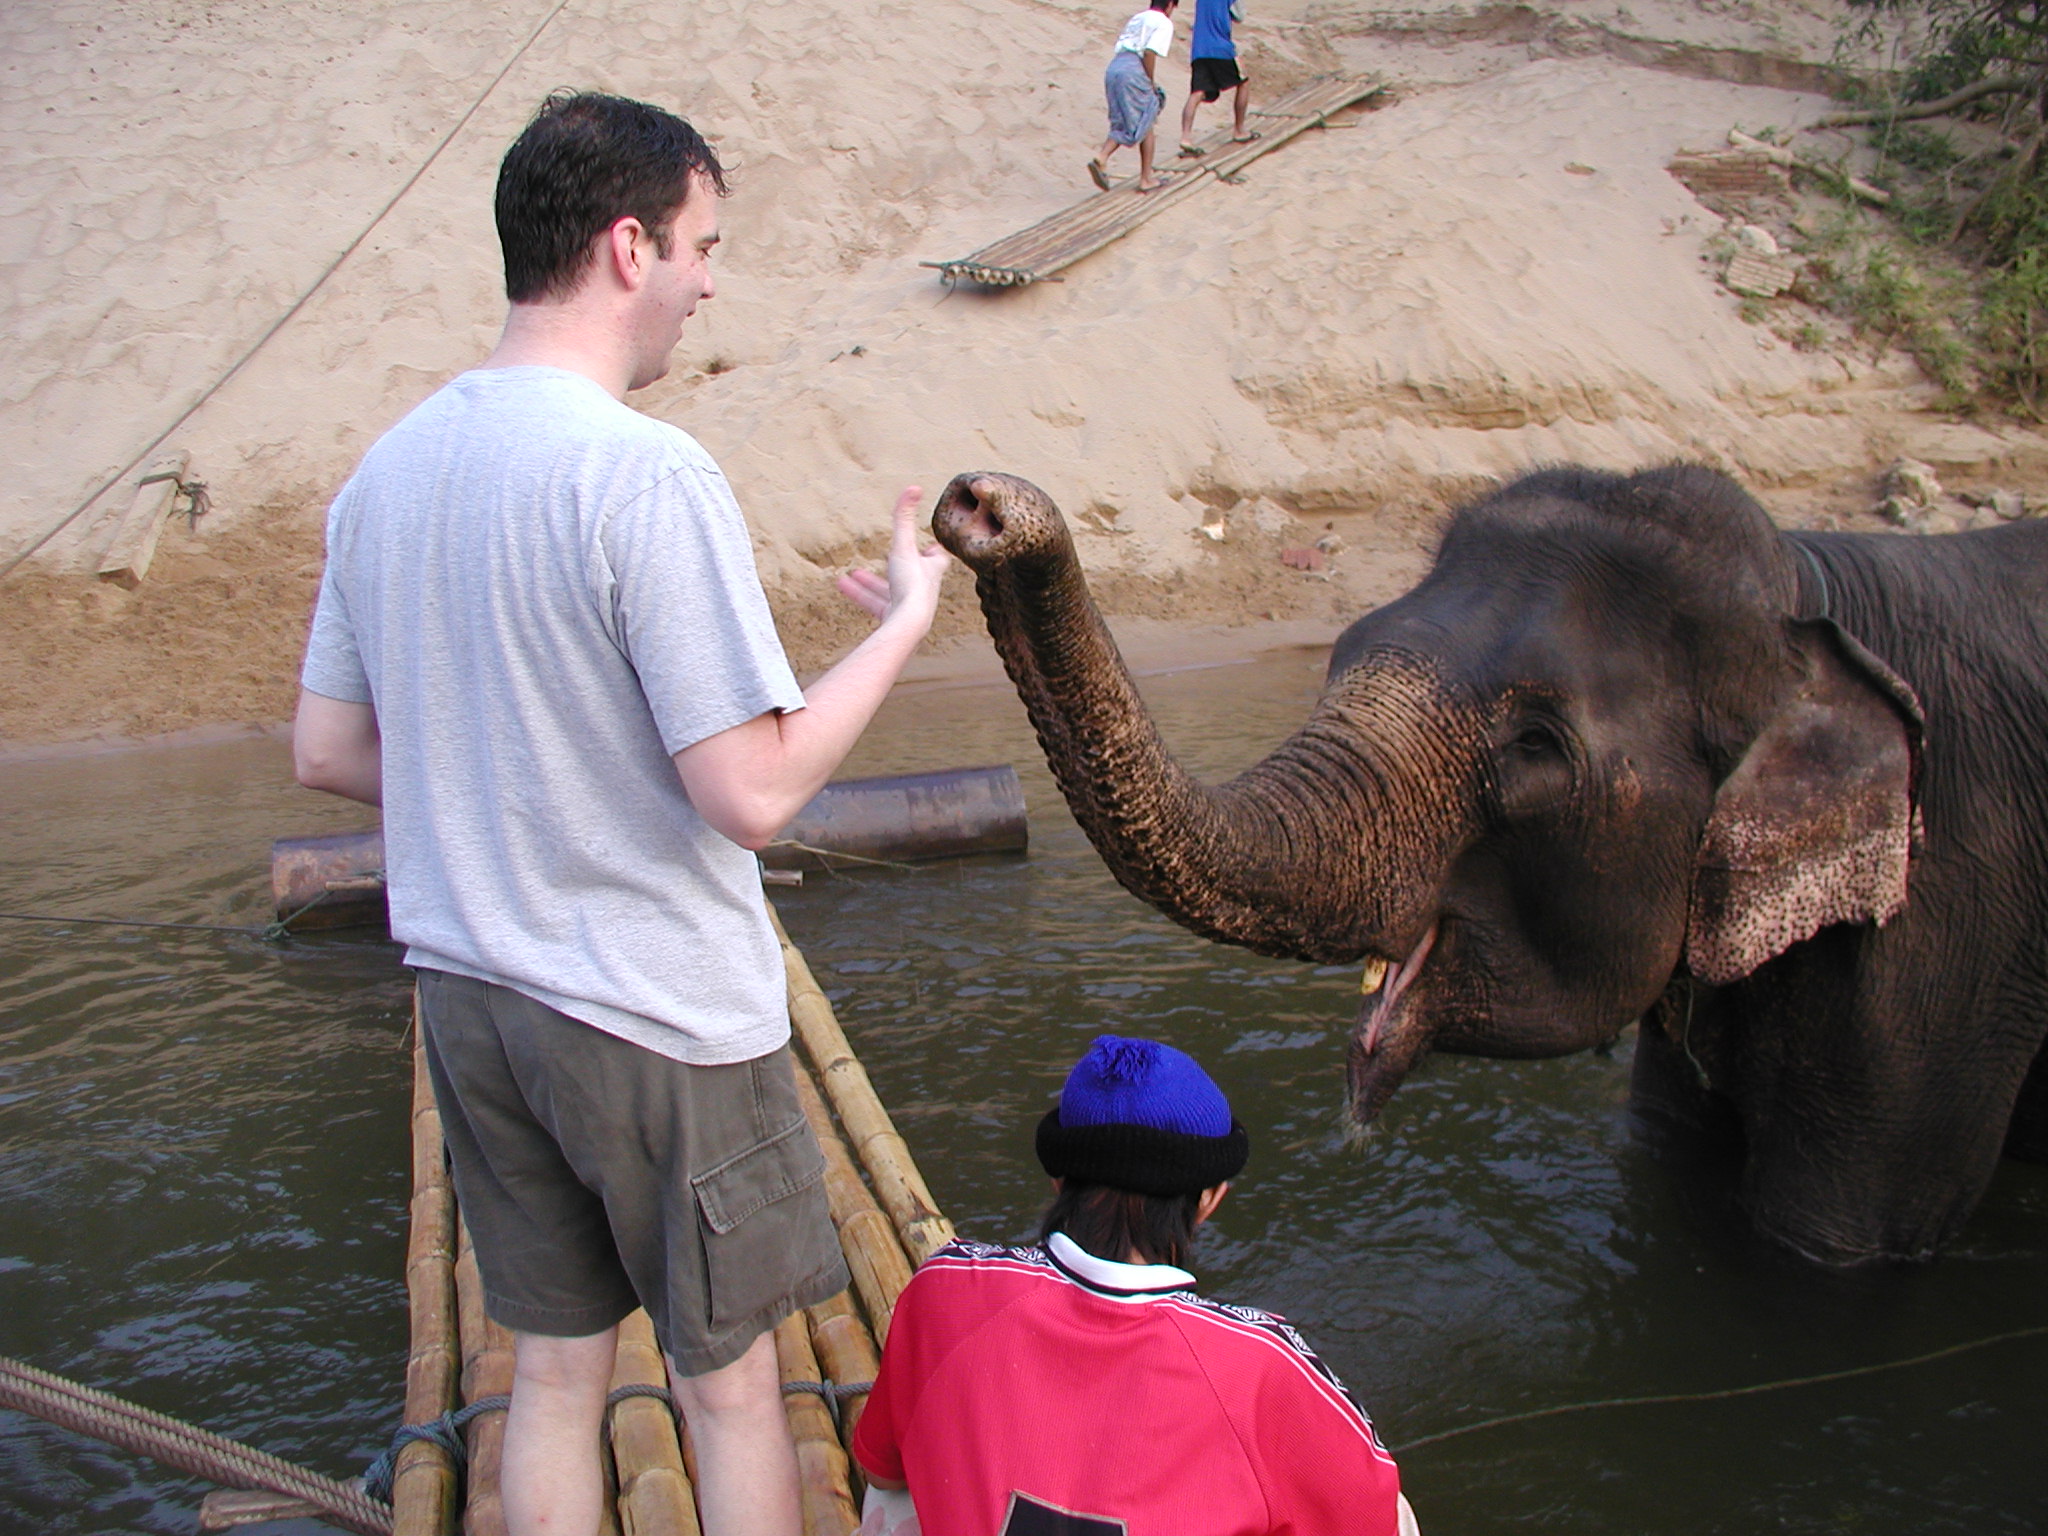 Feeding the elephants. (1).jpg